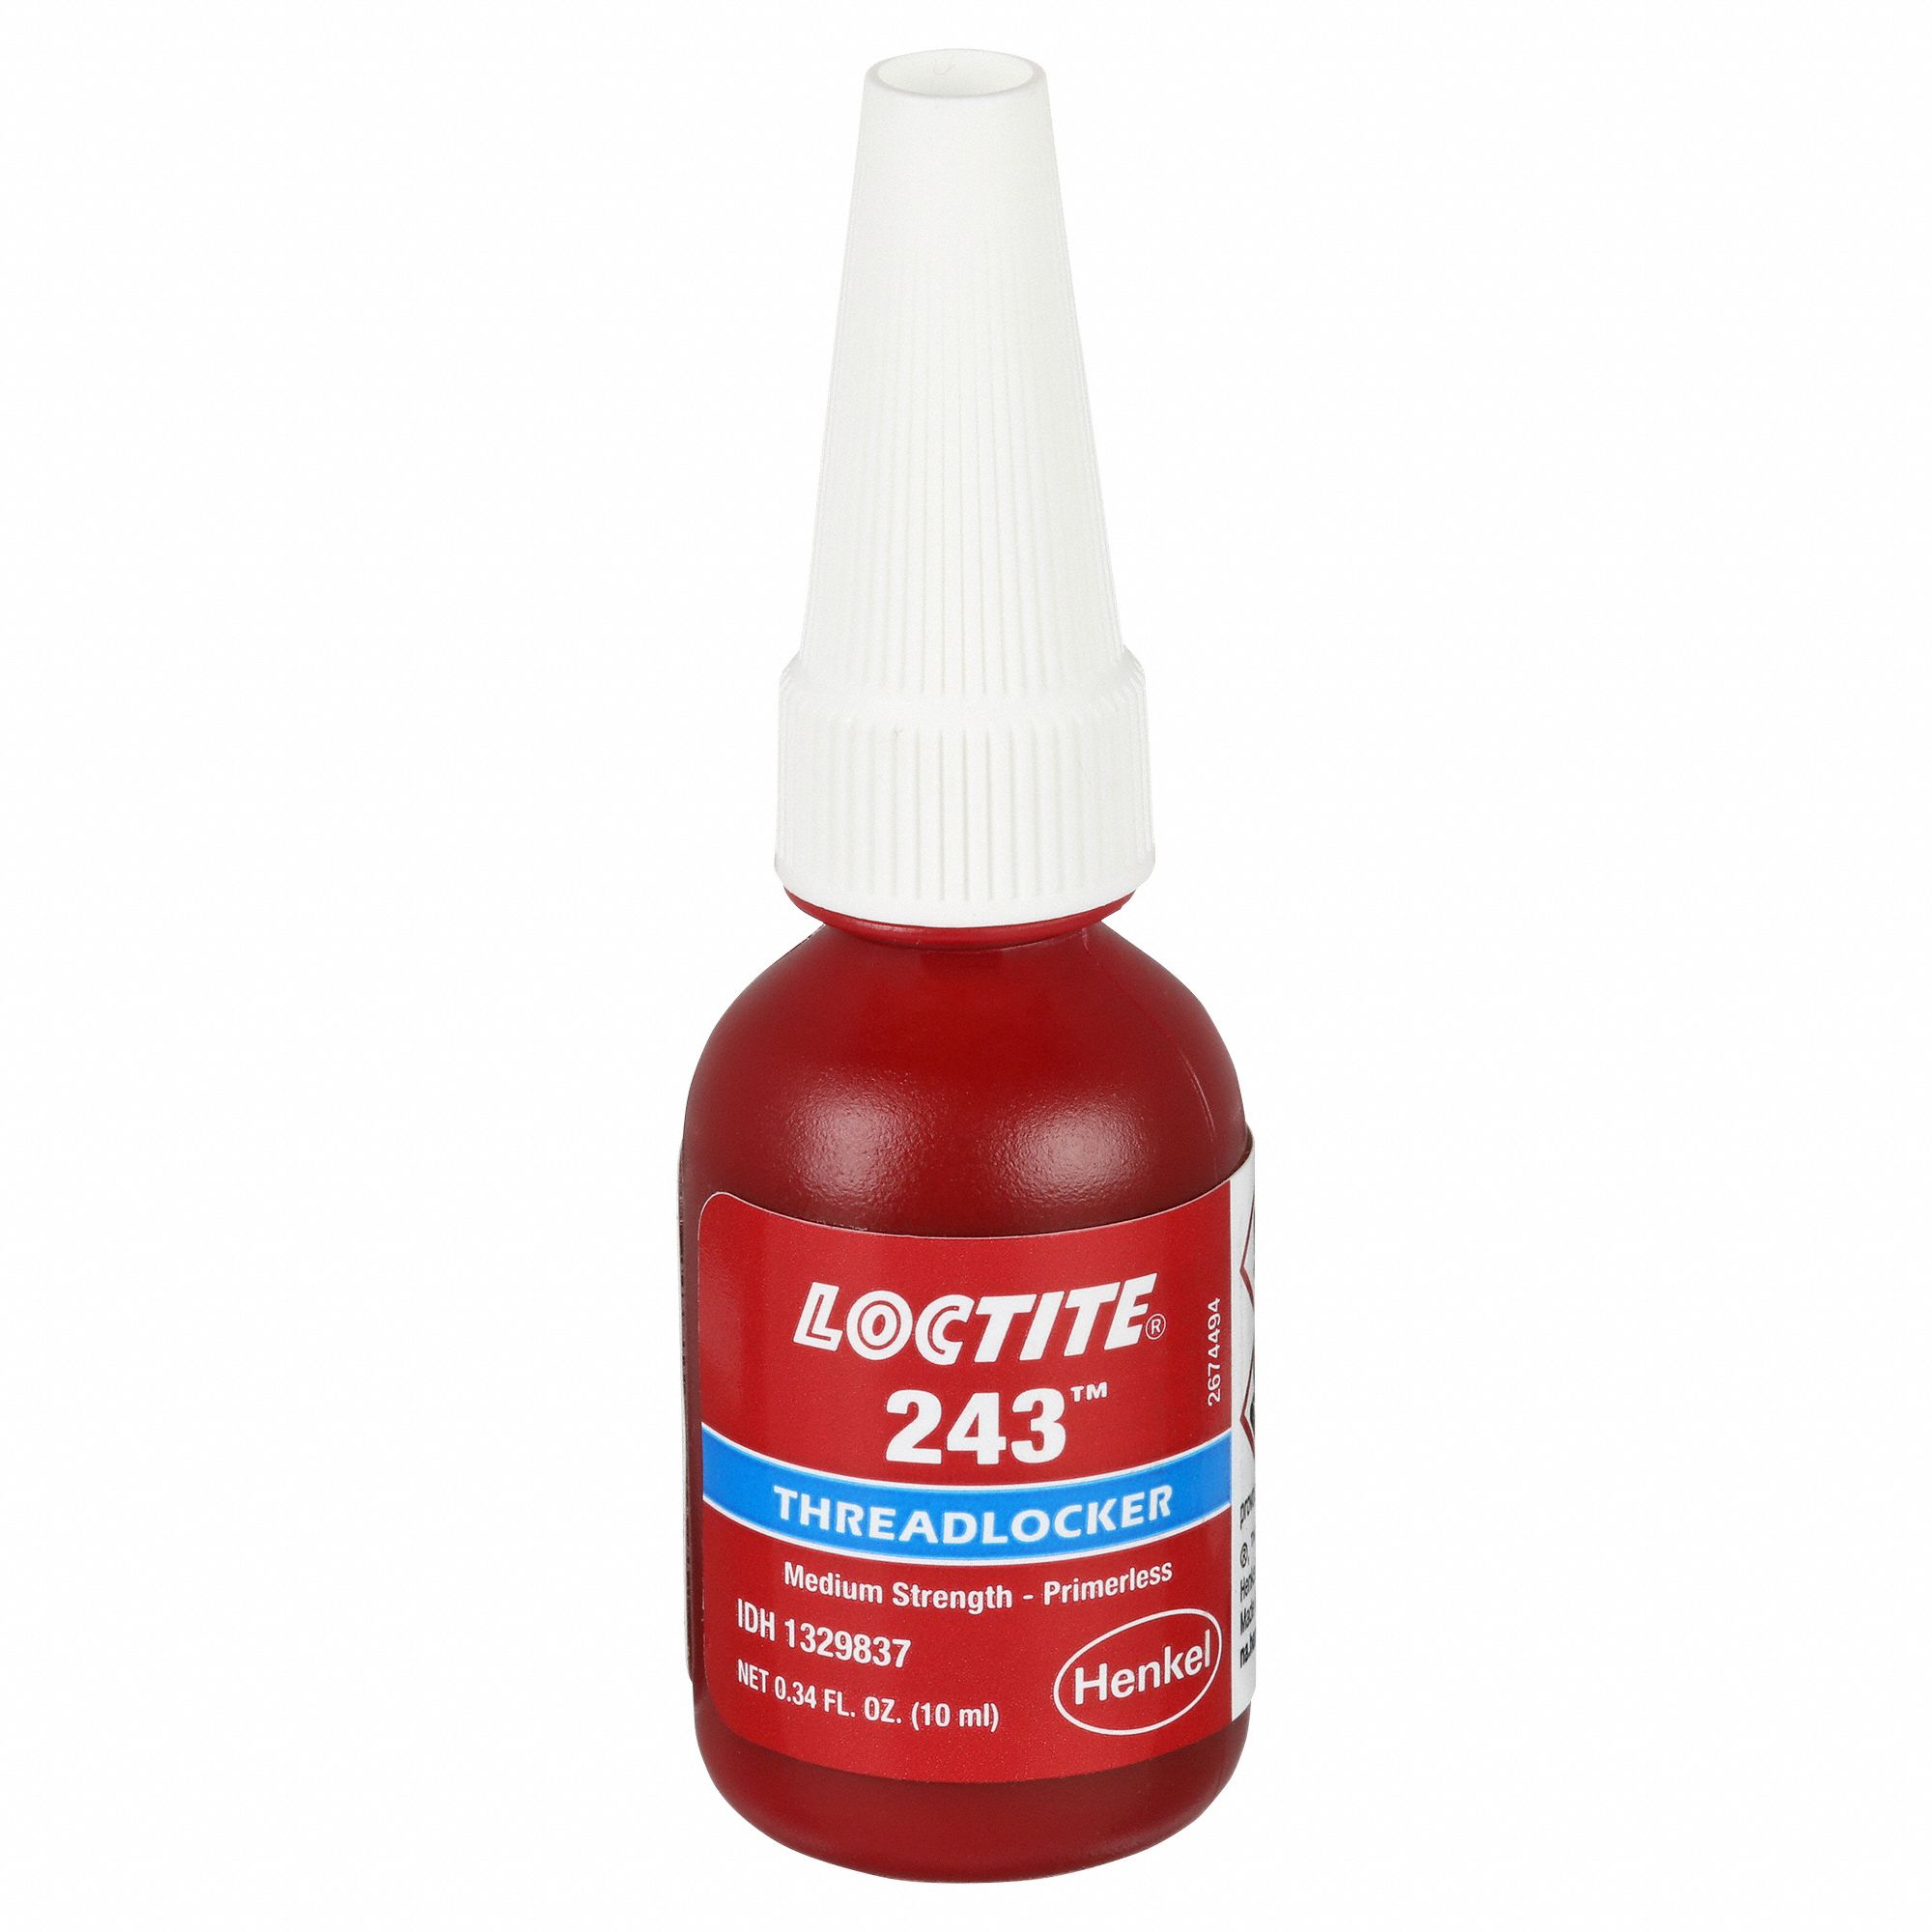 Henkel Loctite 243 50ml Medium Strength Threadlocker Adhesive USA ACTOOLS